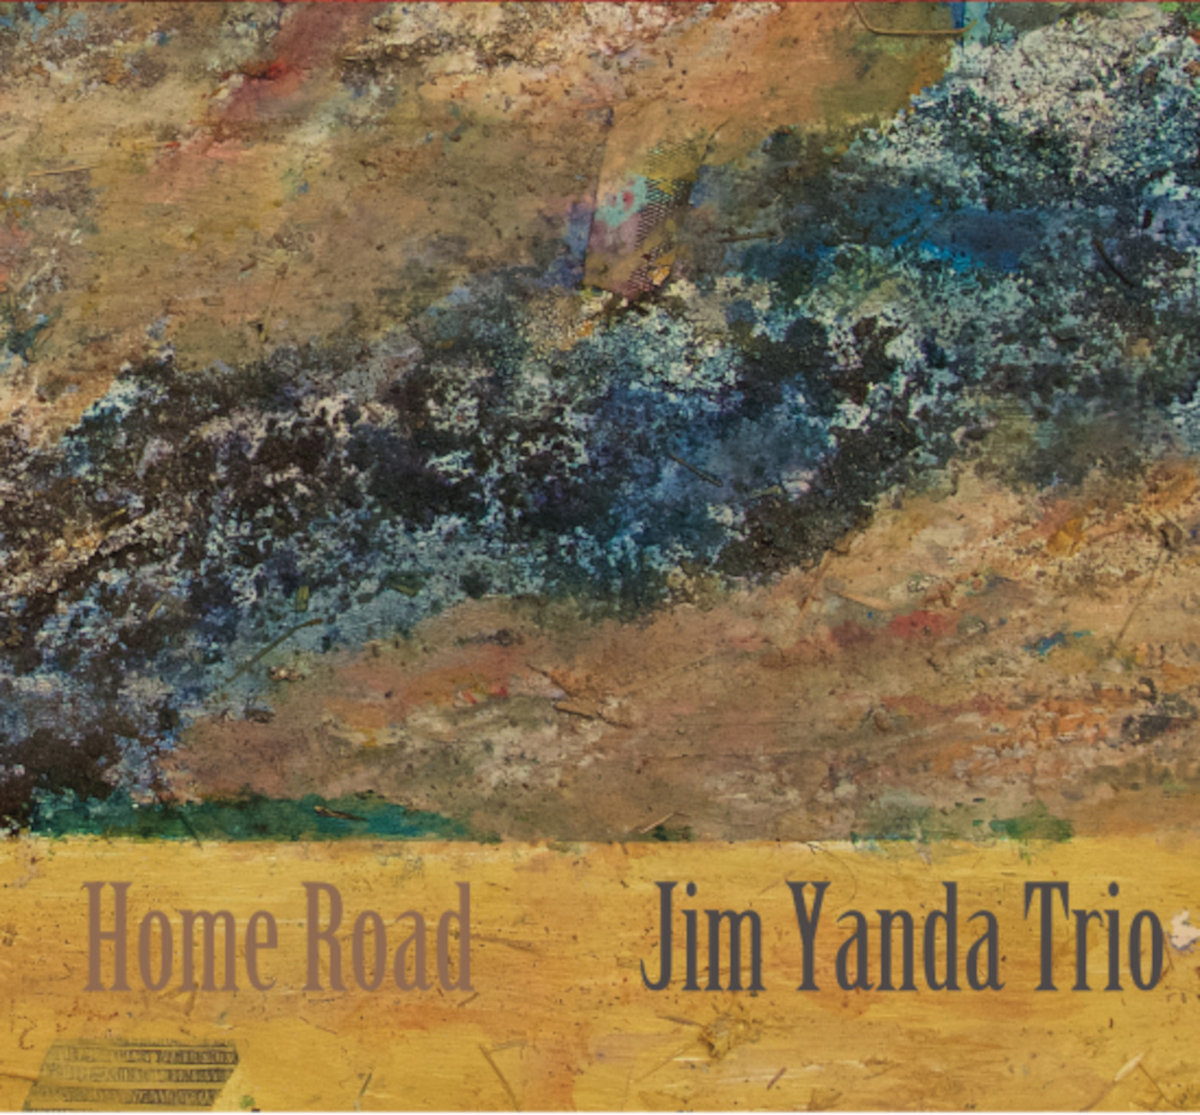 Jim Yanda Trio — Home Road